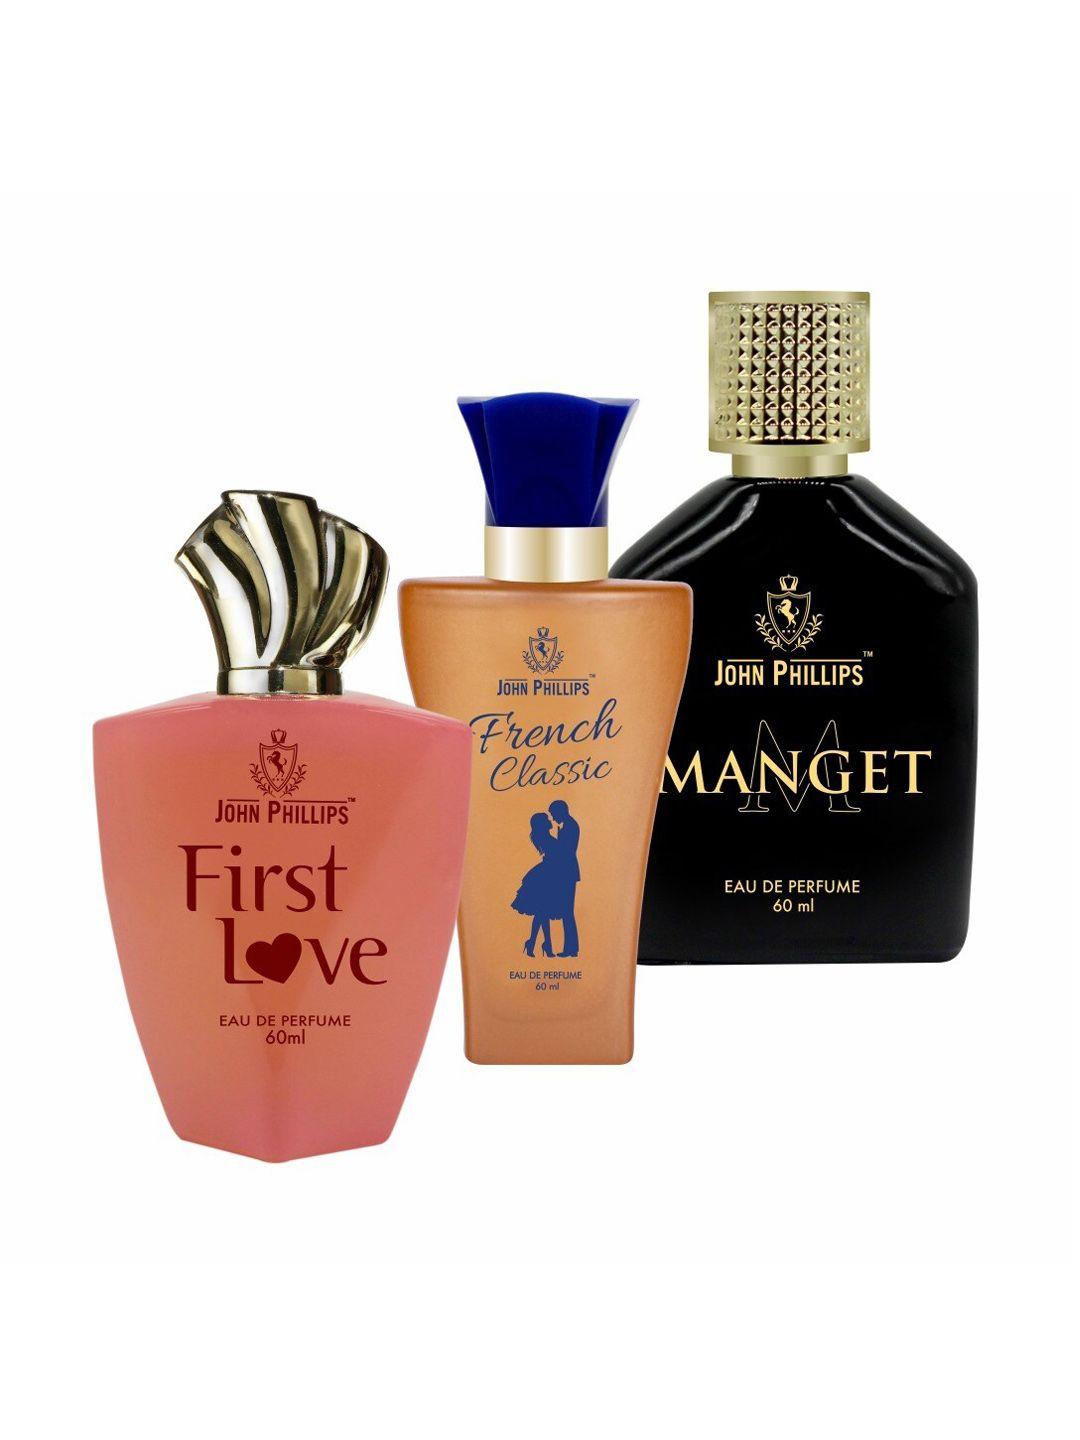 john phillips set of 3 eau de perfume 60 ml each- first love - french classic - manget